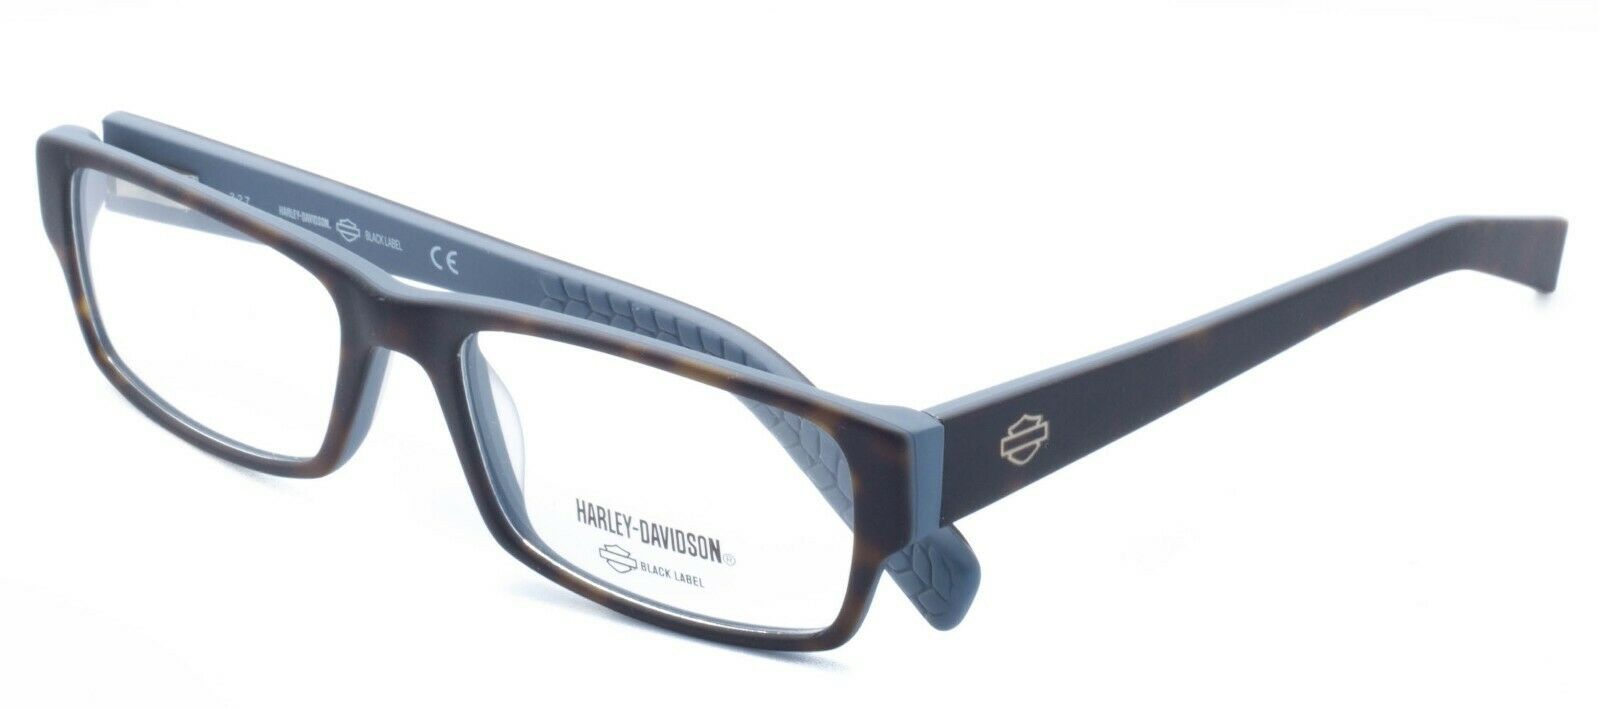 HARLEY-DAVIDSON HD1020 052 55mm Eyewear FRAMES RX Optical Eyeglasses Glasses New